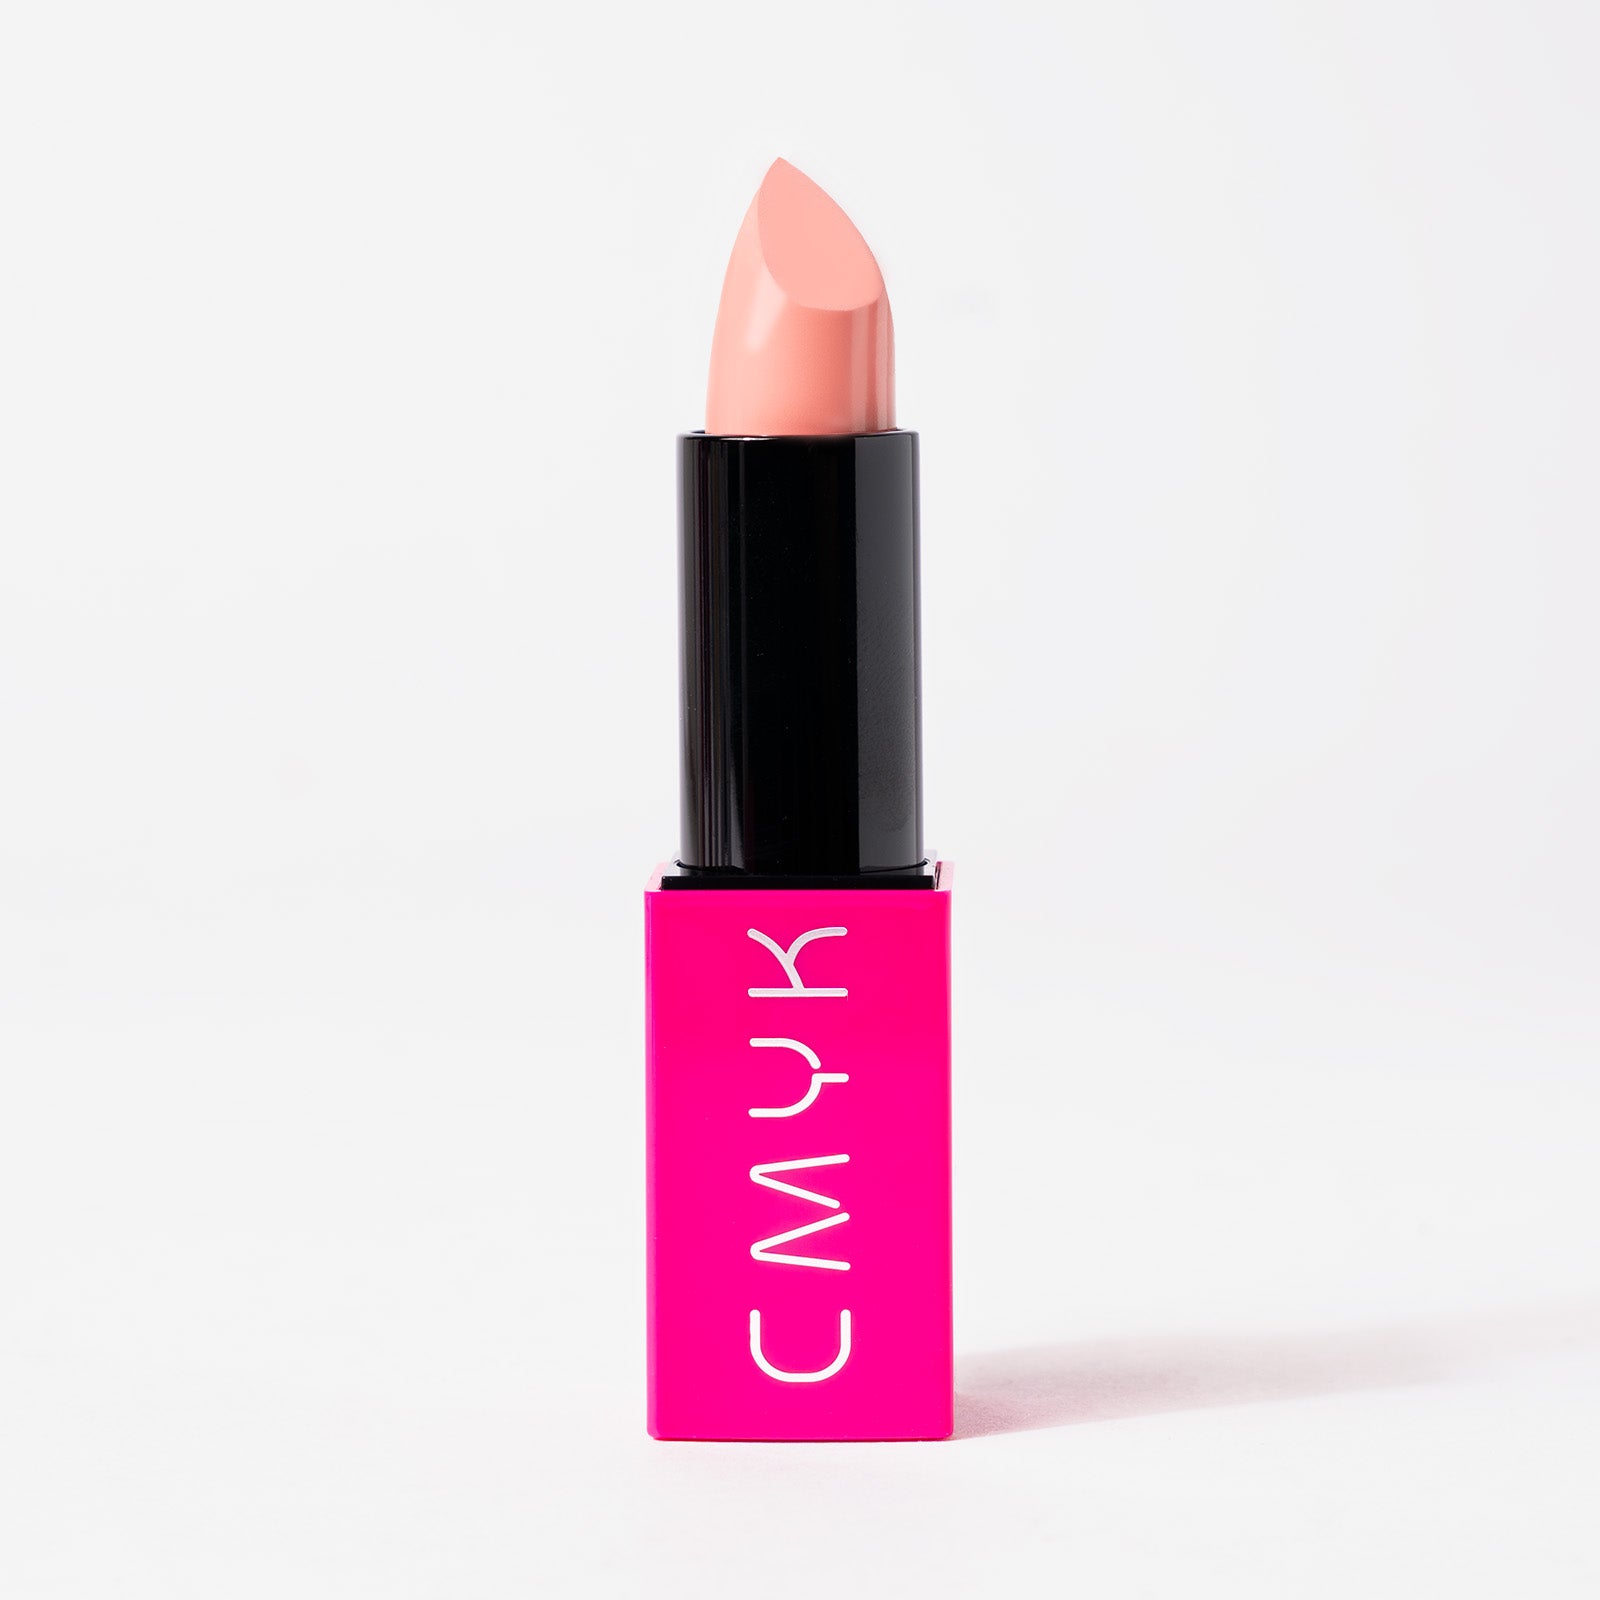 Achromatic Lipstick Glue - Non-toxic, Odorless, Traceless Glue